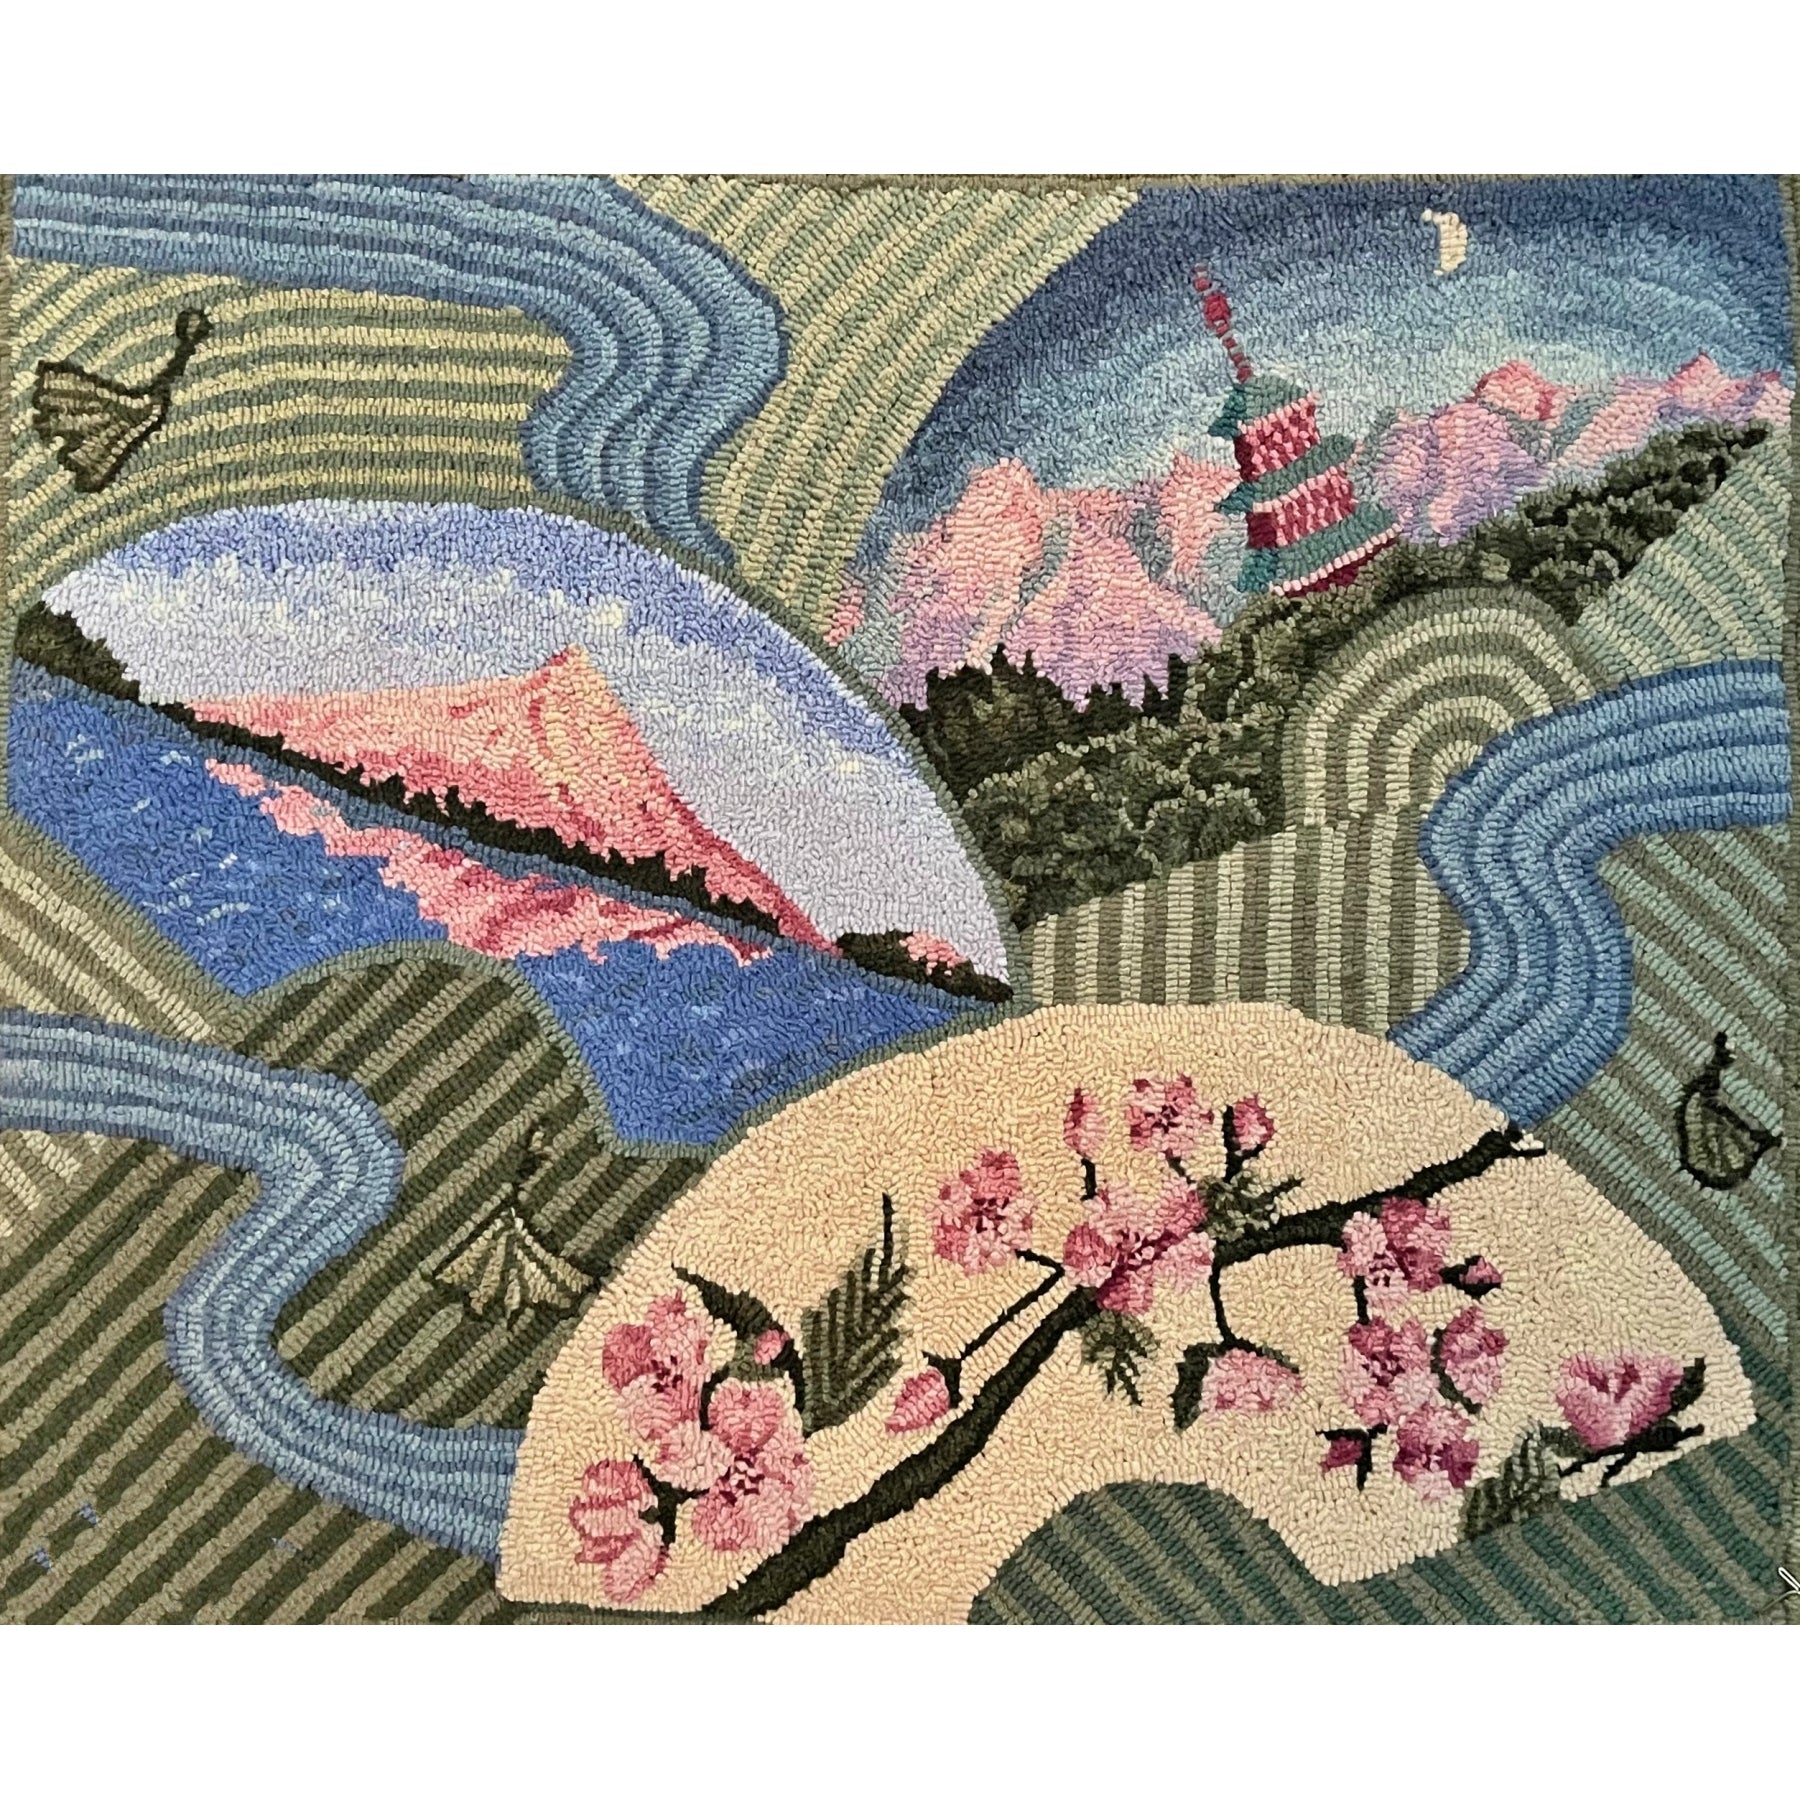 Beautiful Scenery in Japan, rug hooked by Pat Sahakian